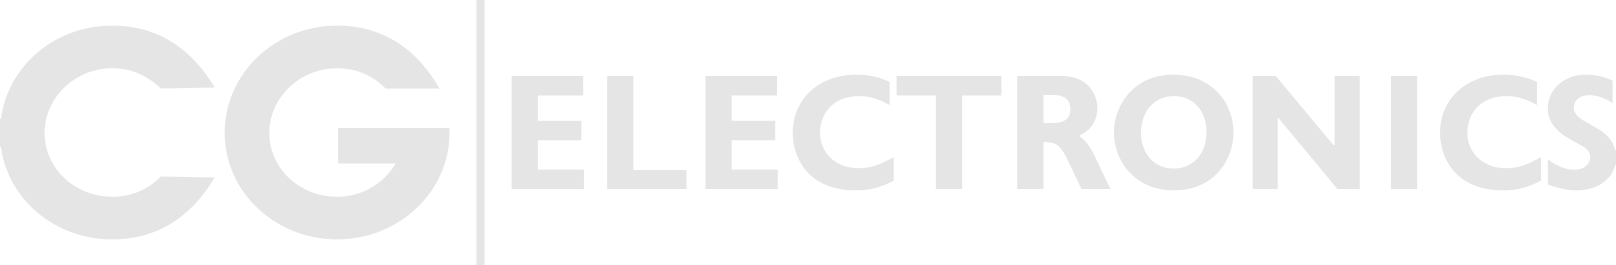 LG Electronics Logo - Compare - LG Nepal